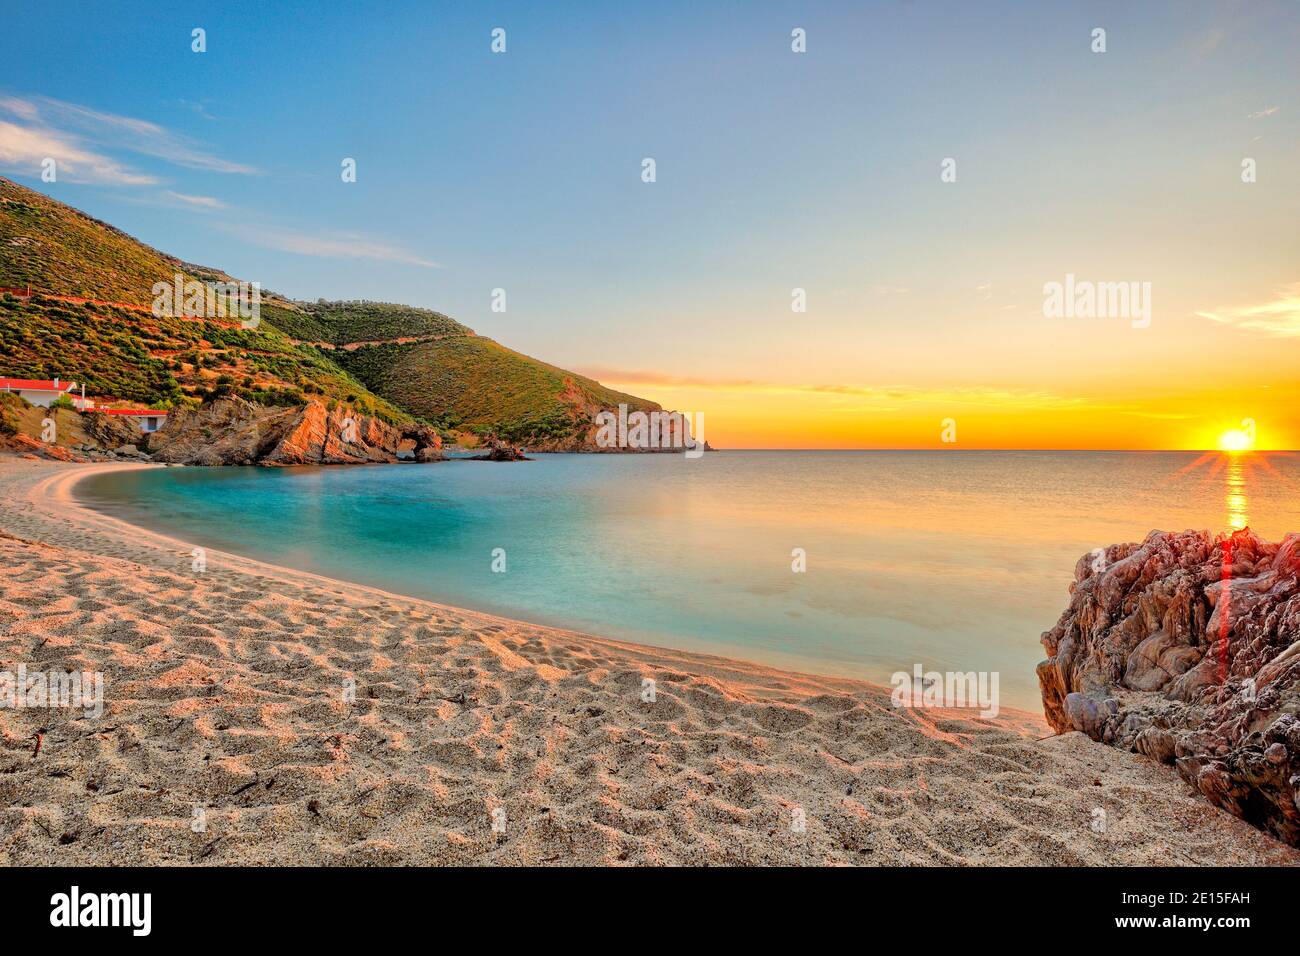 The sunrise at the beach Kalamos in Evia, Greece Stock Photo